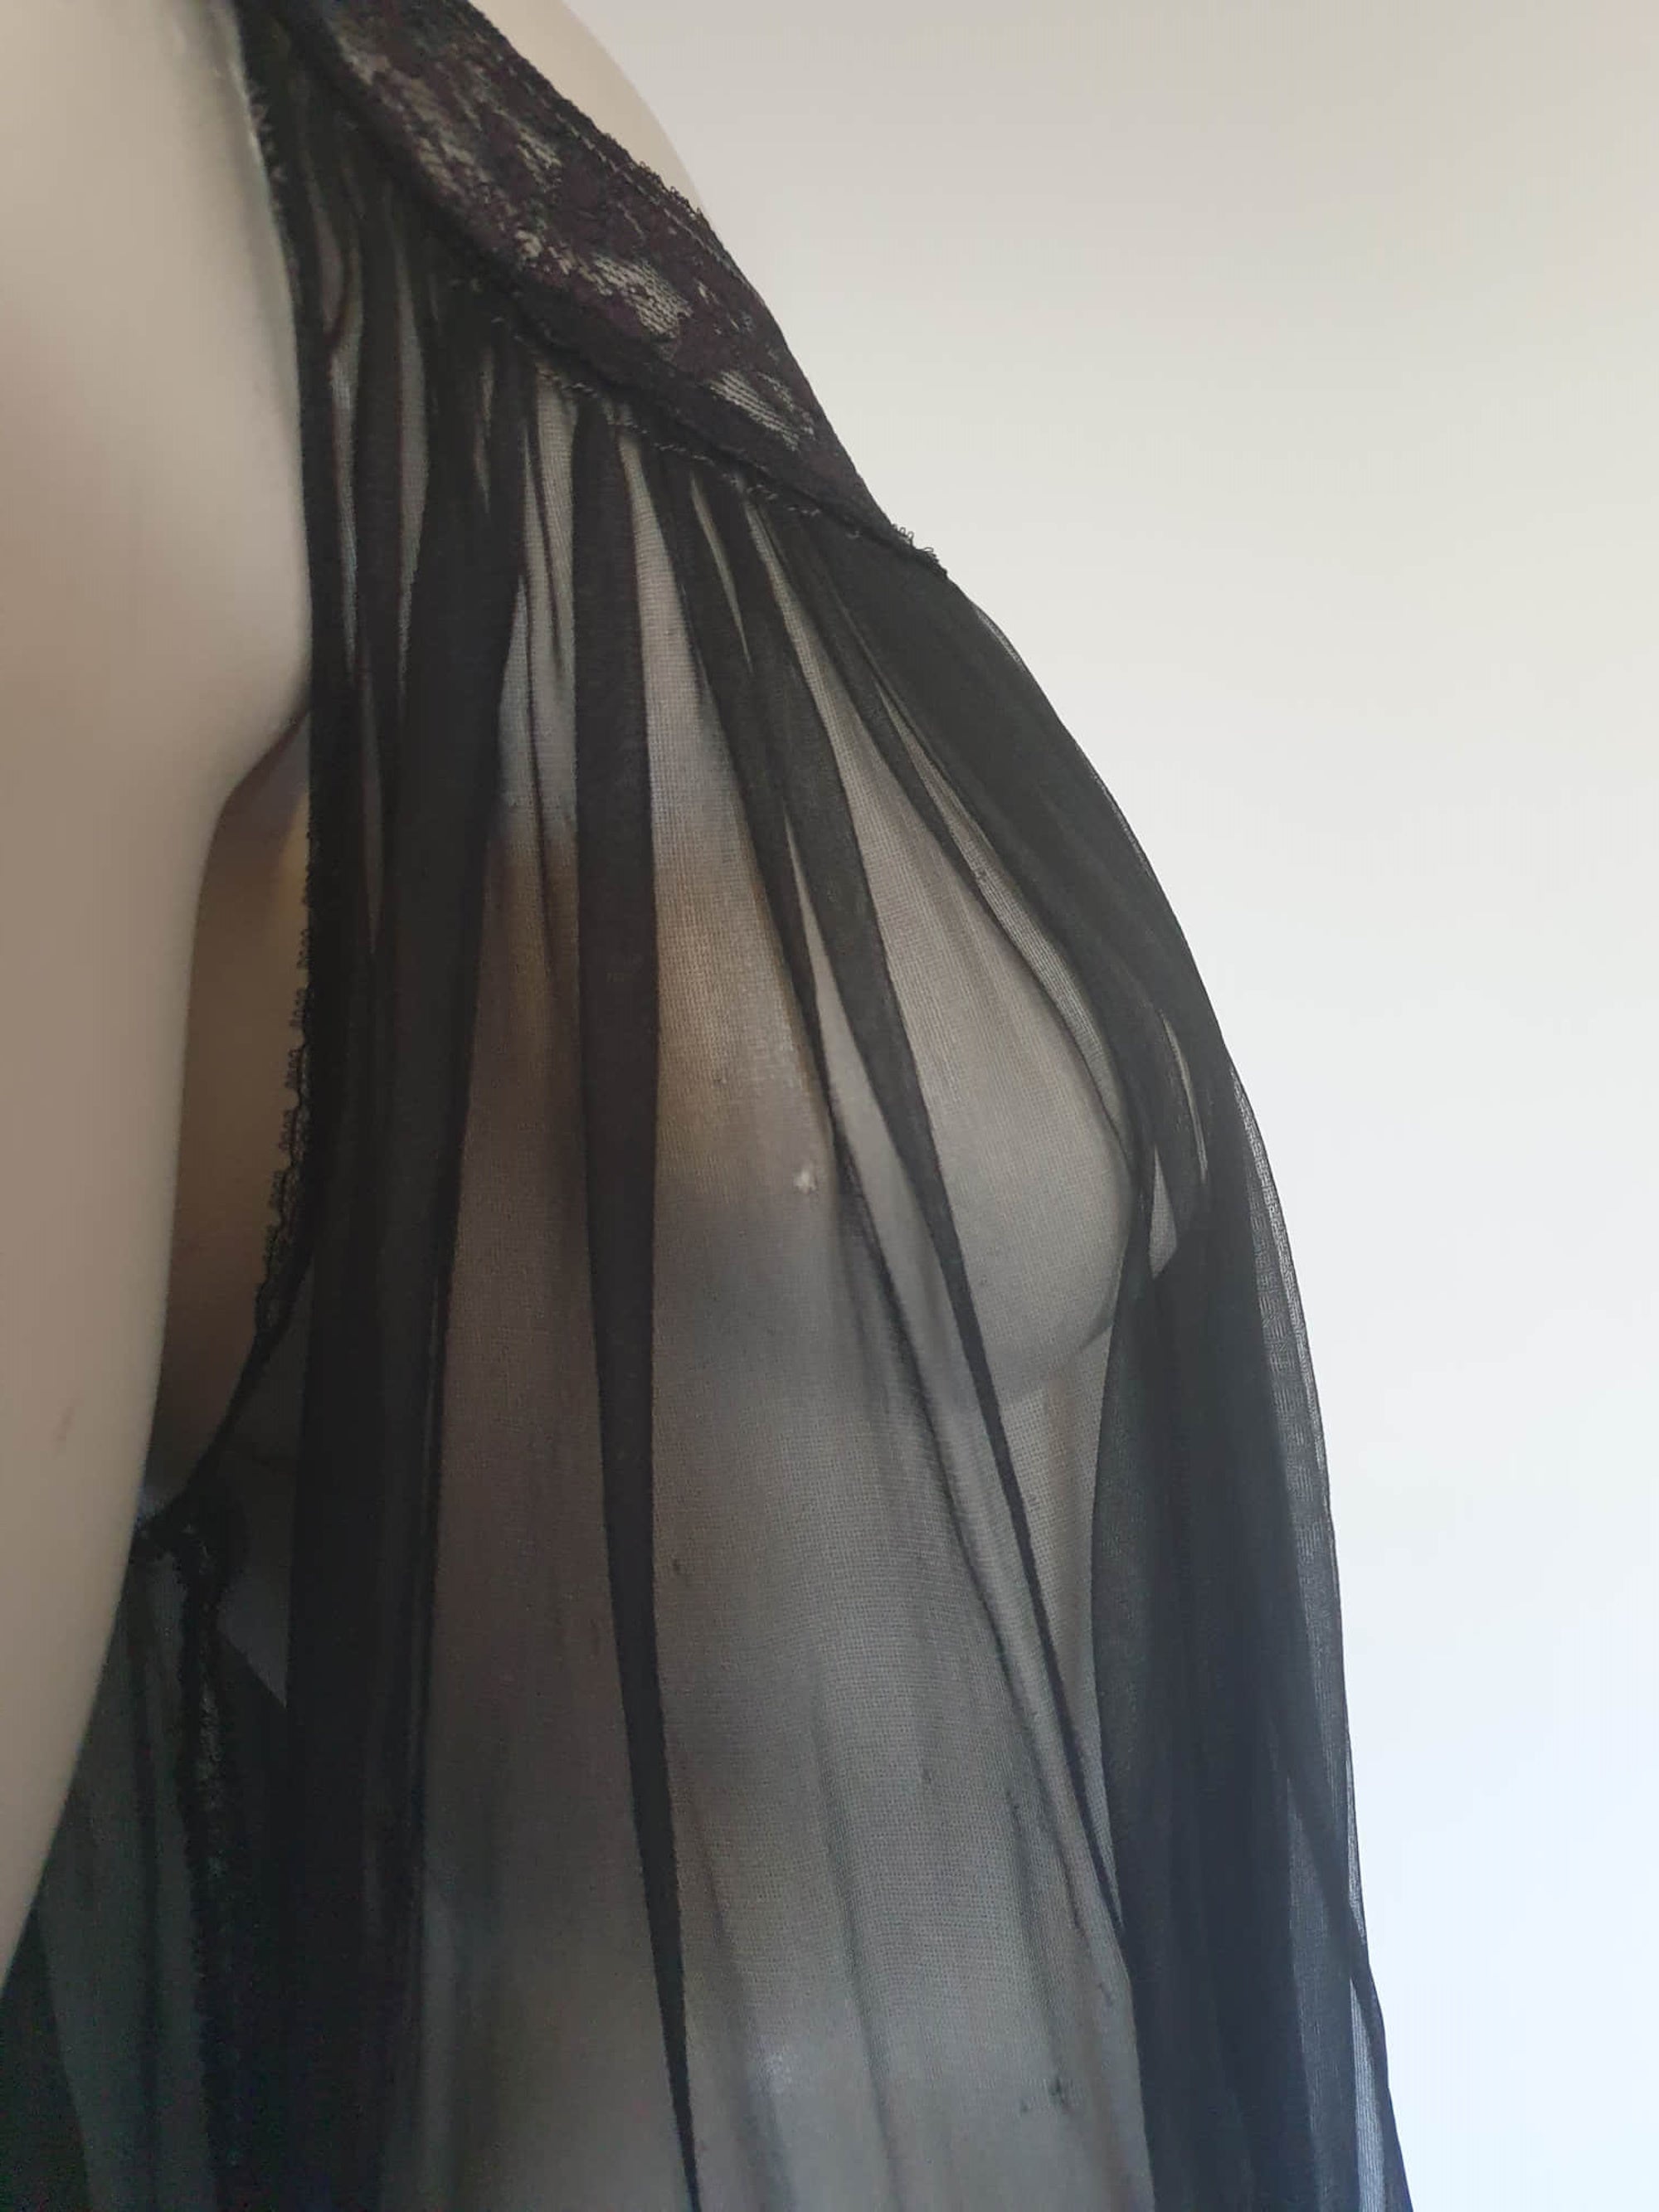 1950s vintage sheer black nightgown on a circular lace yoke